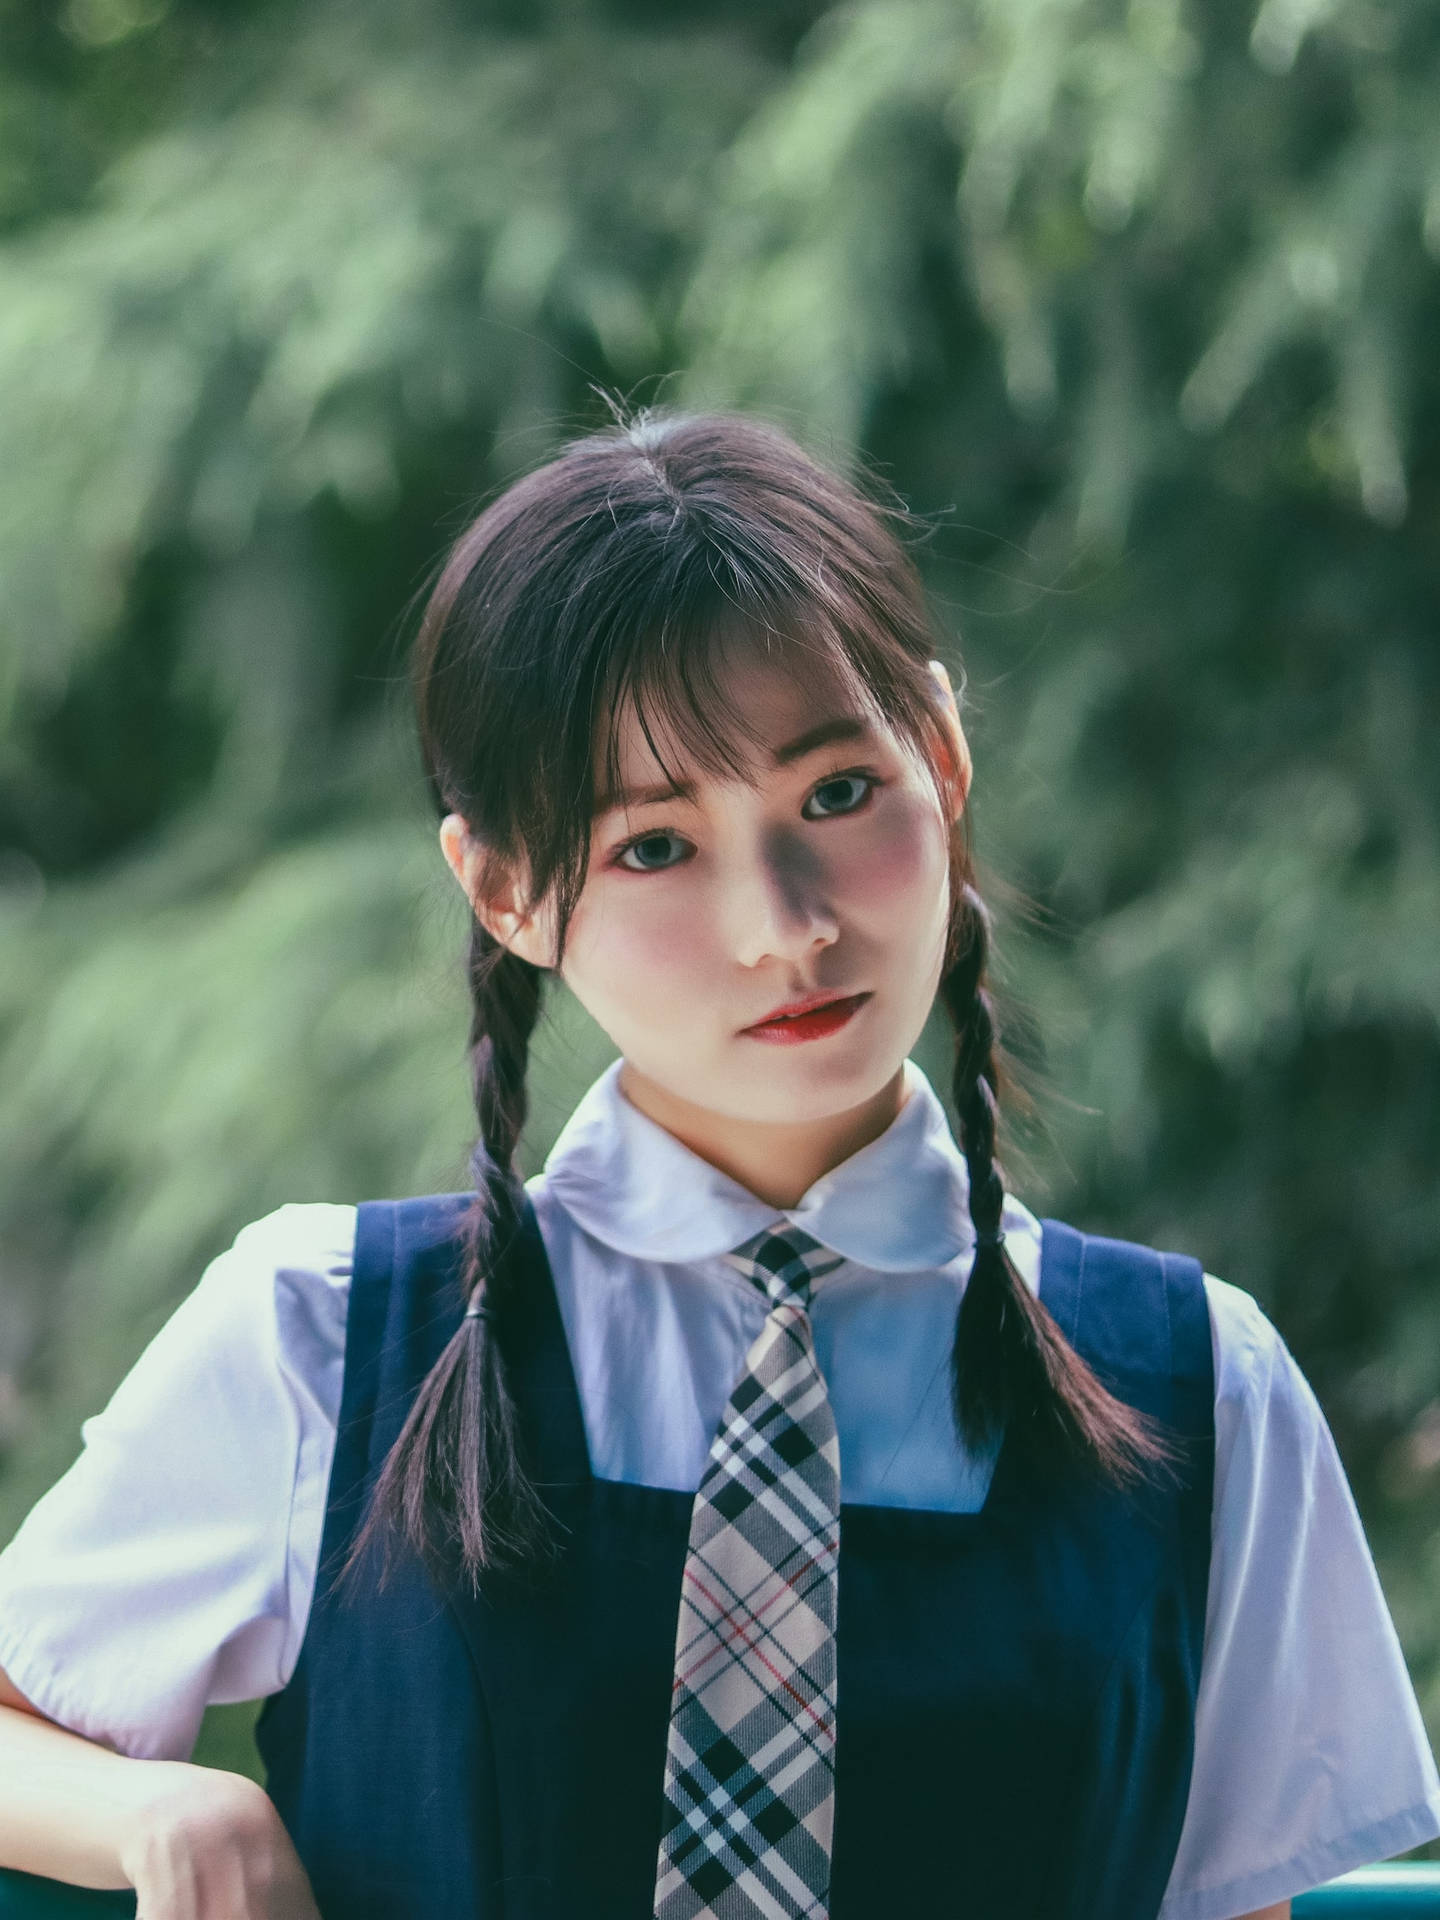 Asiatiskteenagepige-student Iført Uniform Wallpaper